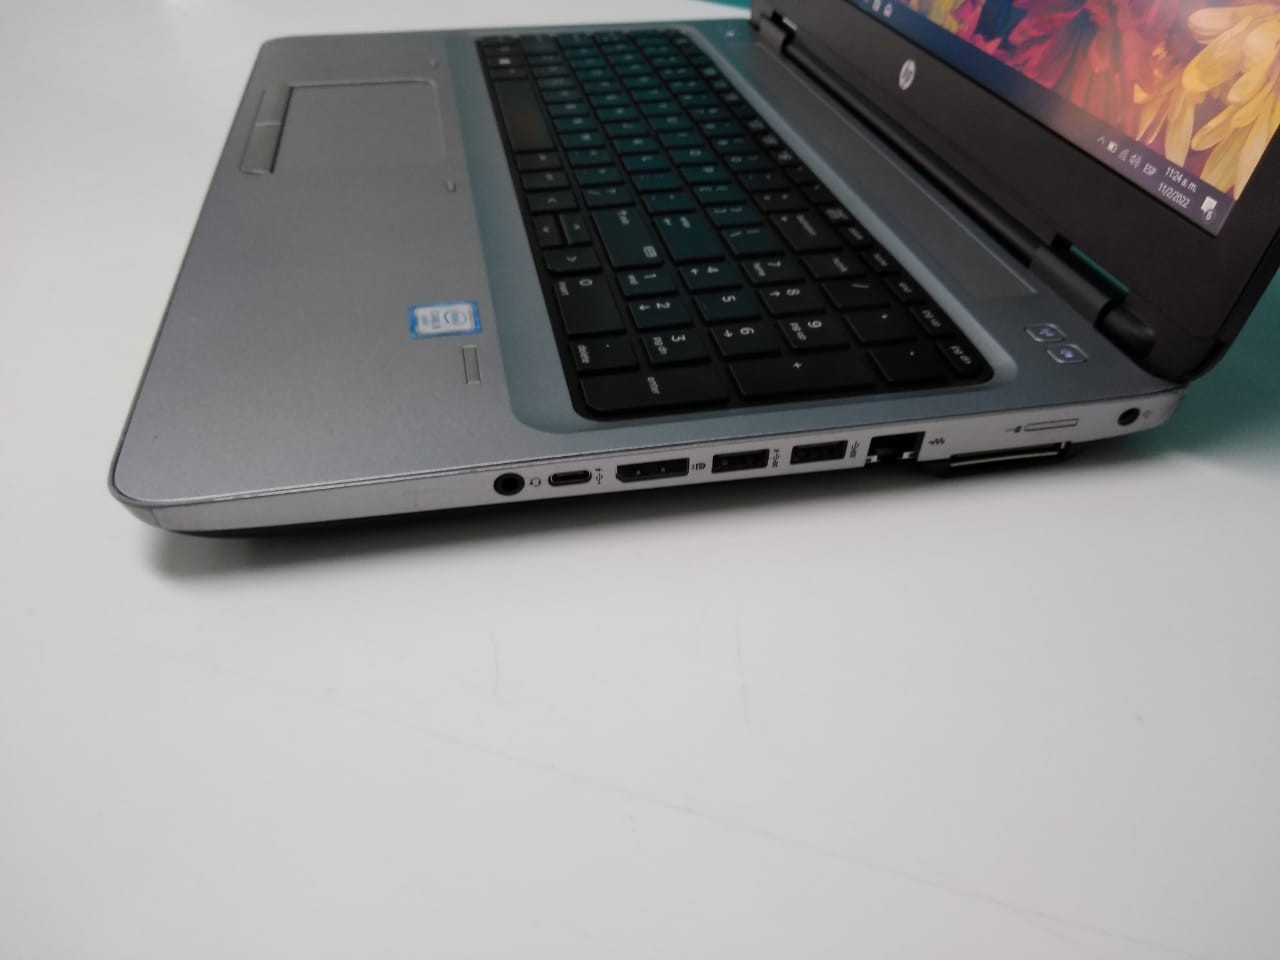 computadoras y laptops - Laptop HP ProBOOK 650 G2 Core i5 VGA 128SSD /8GB RAM 15.6 Pulg/6TA gener/